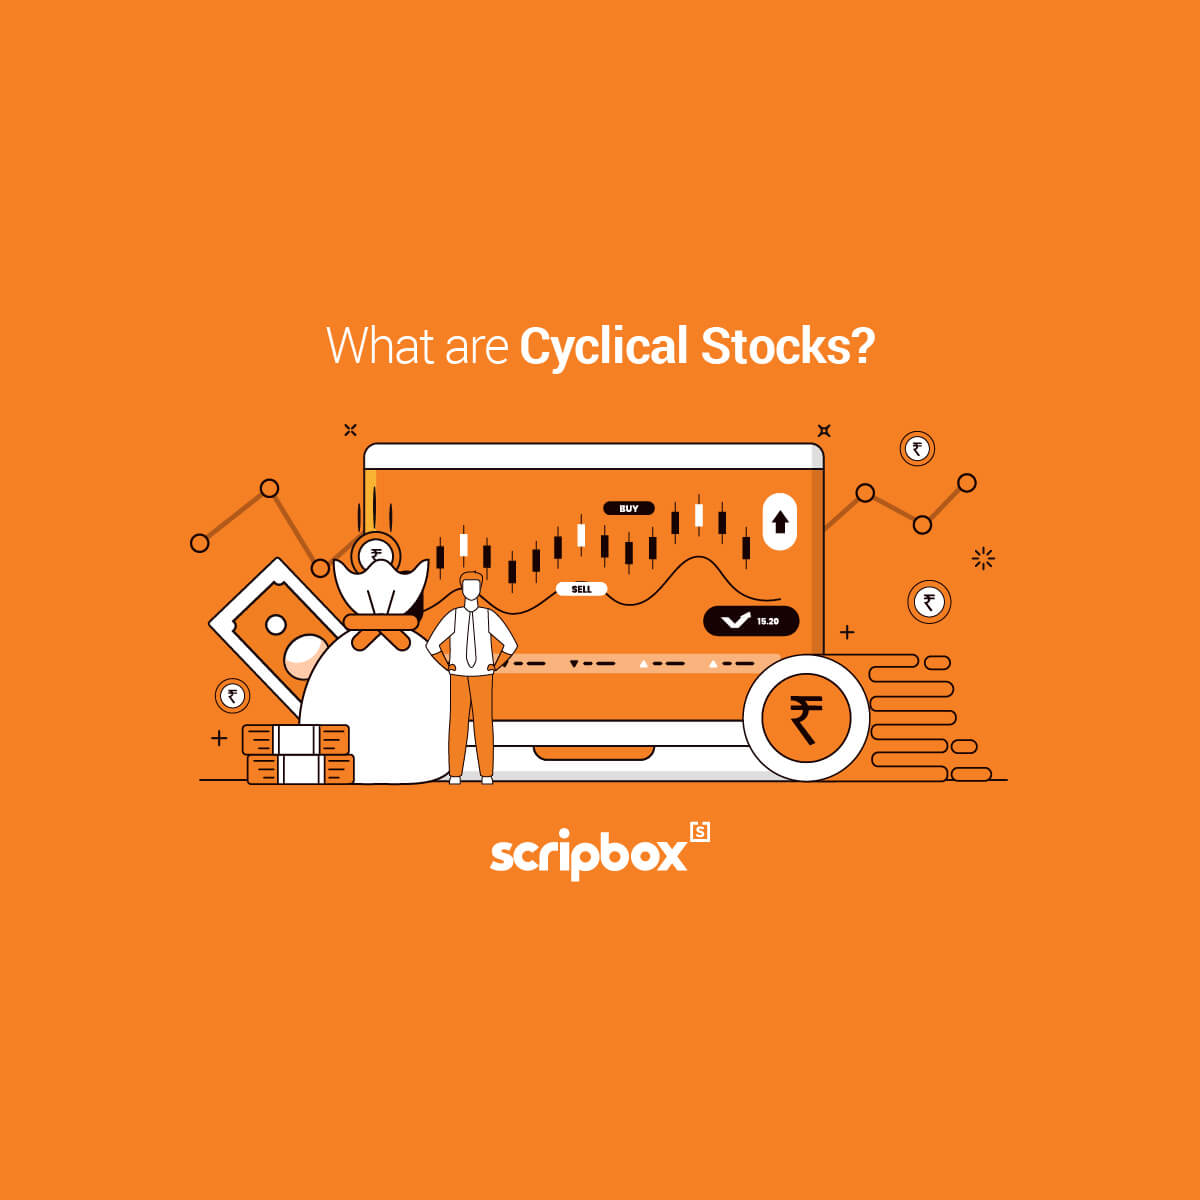 cyclical stocks